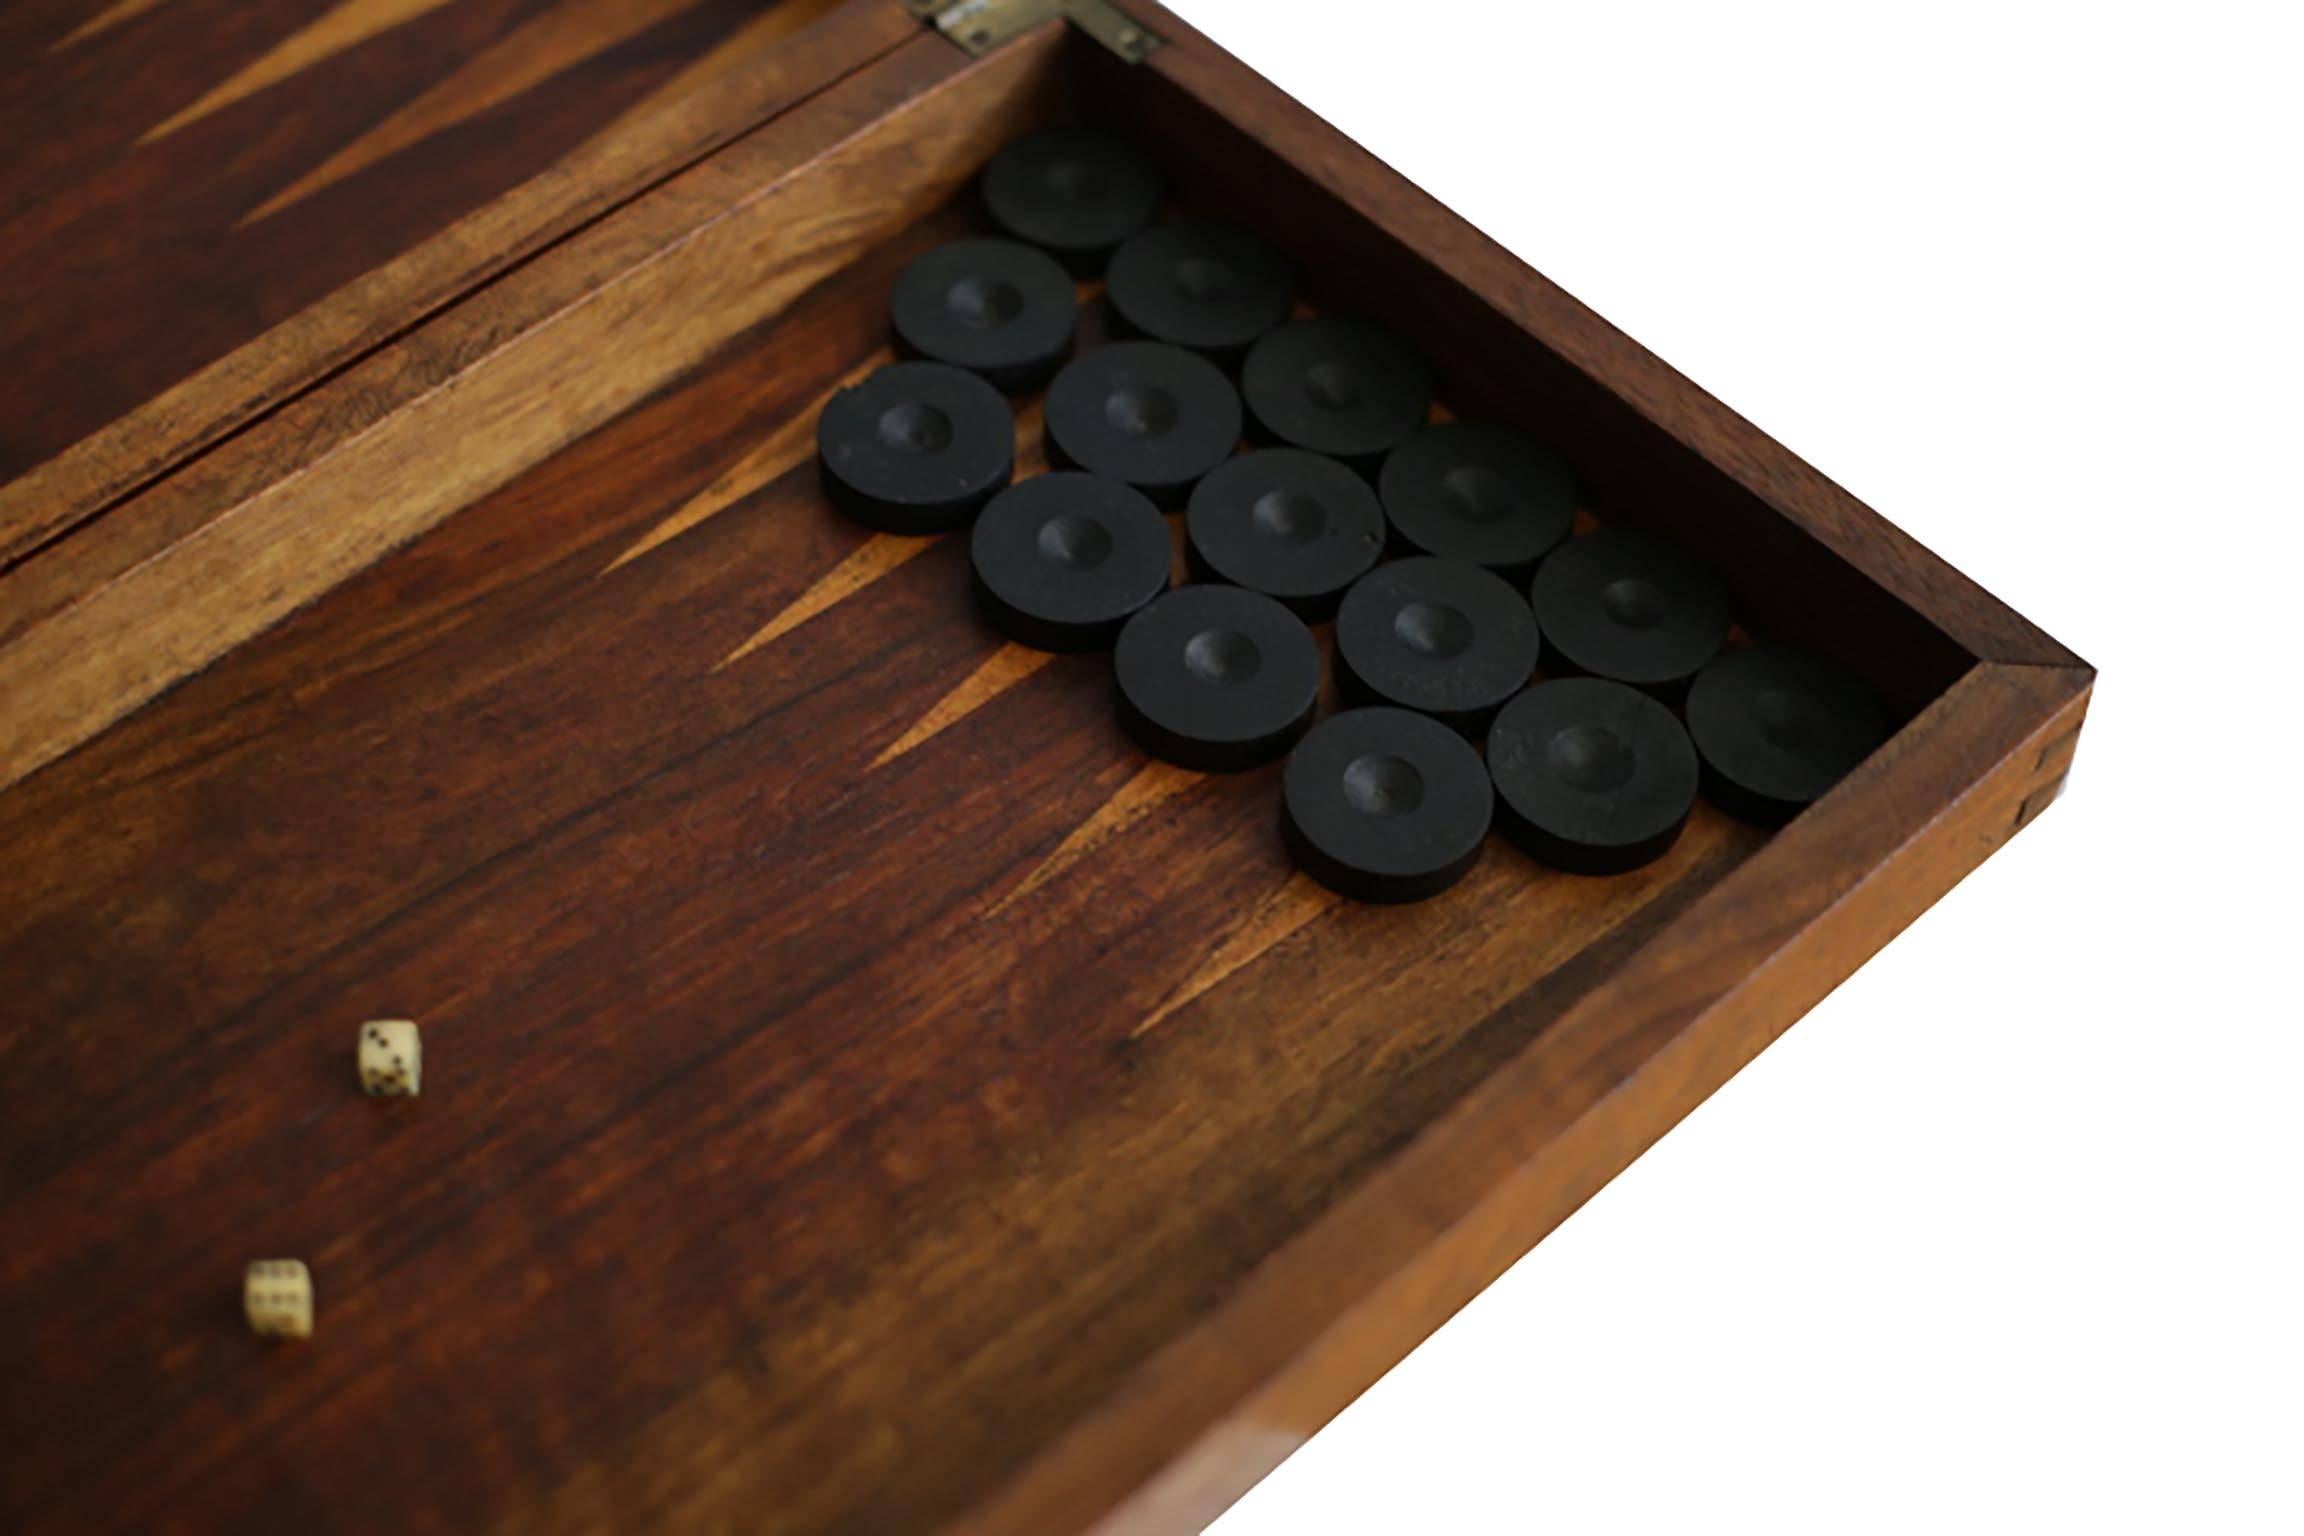 19th Century 19th-Early 20th Century Backgammon Board with Bone Dice, circa 1880-1920s